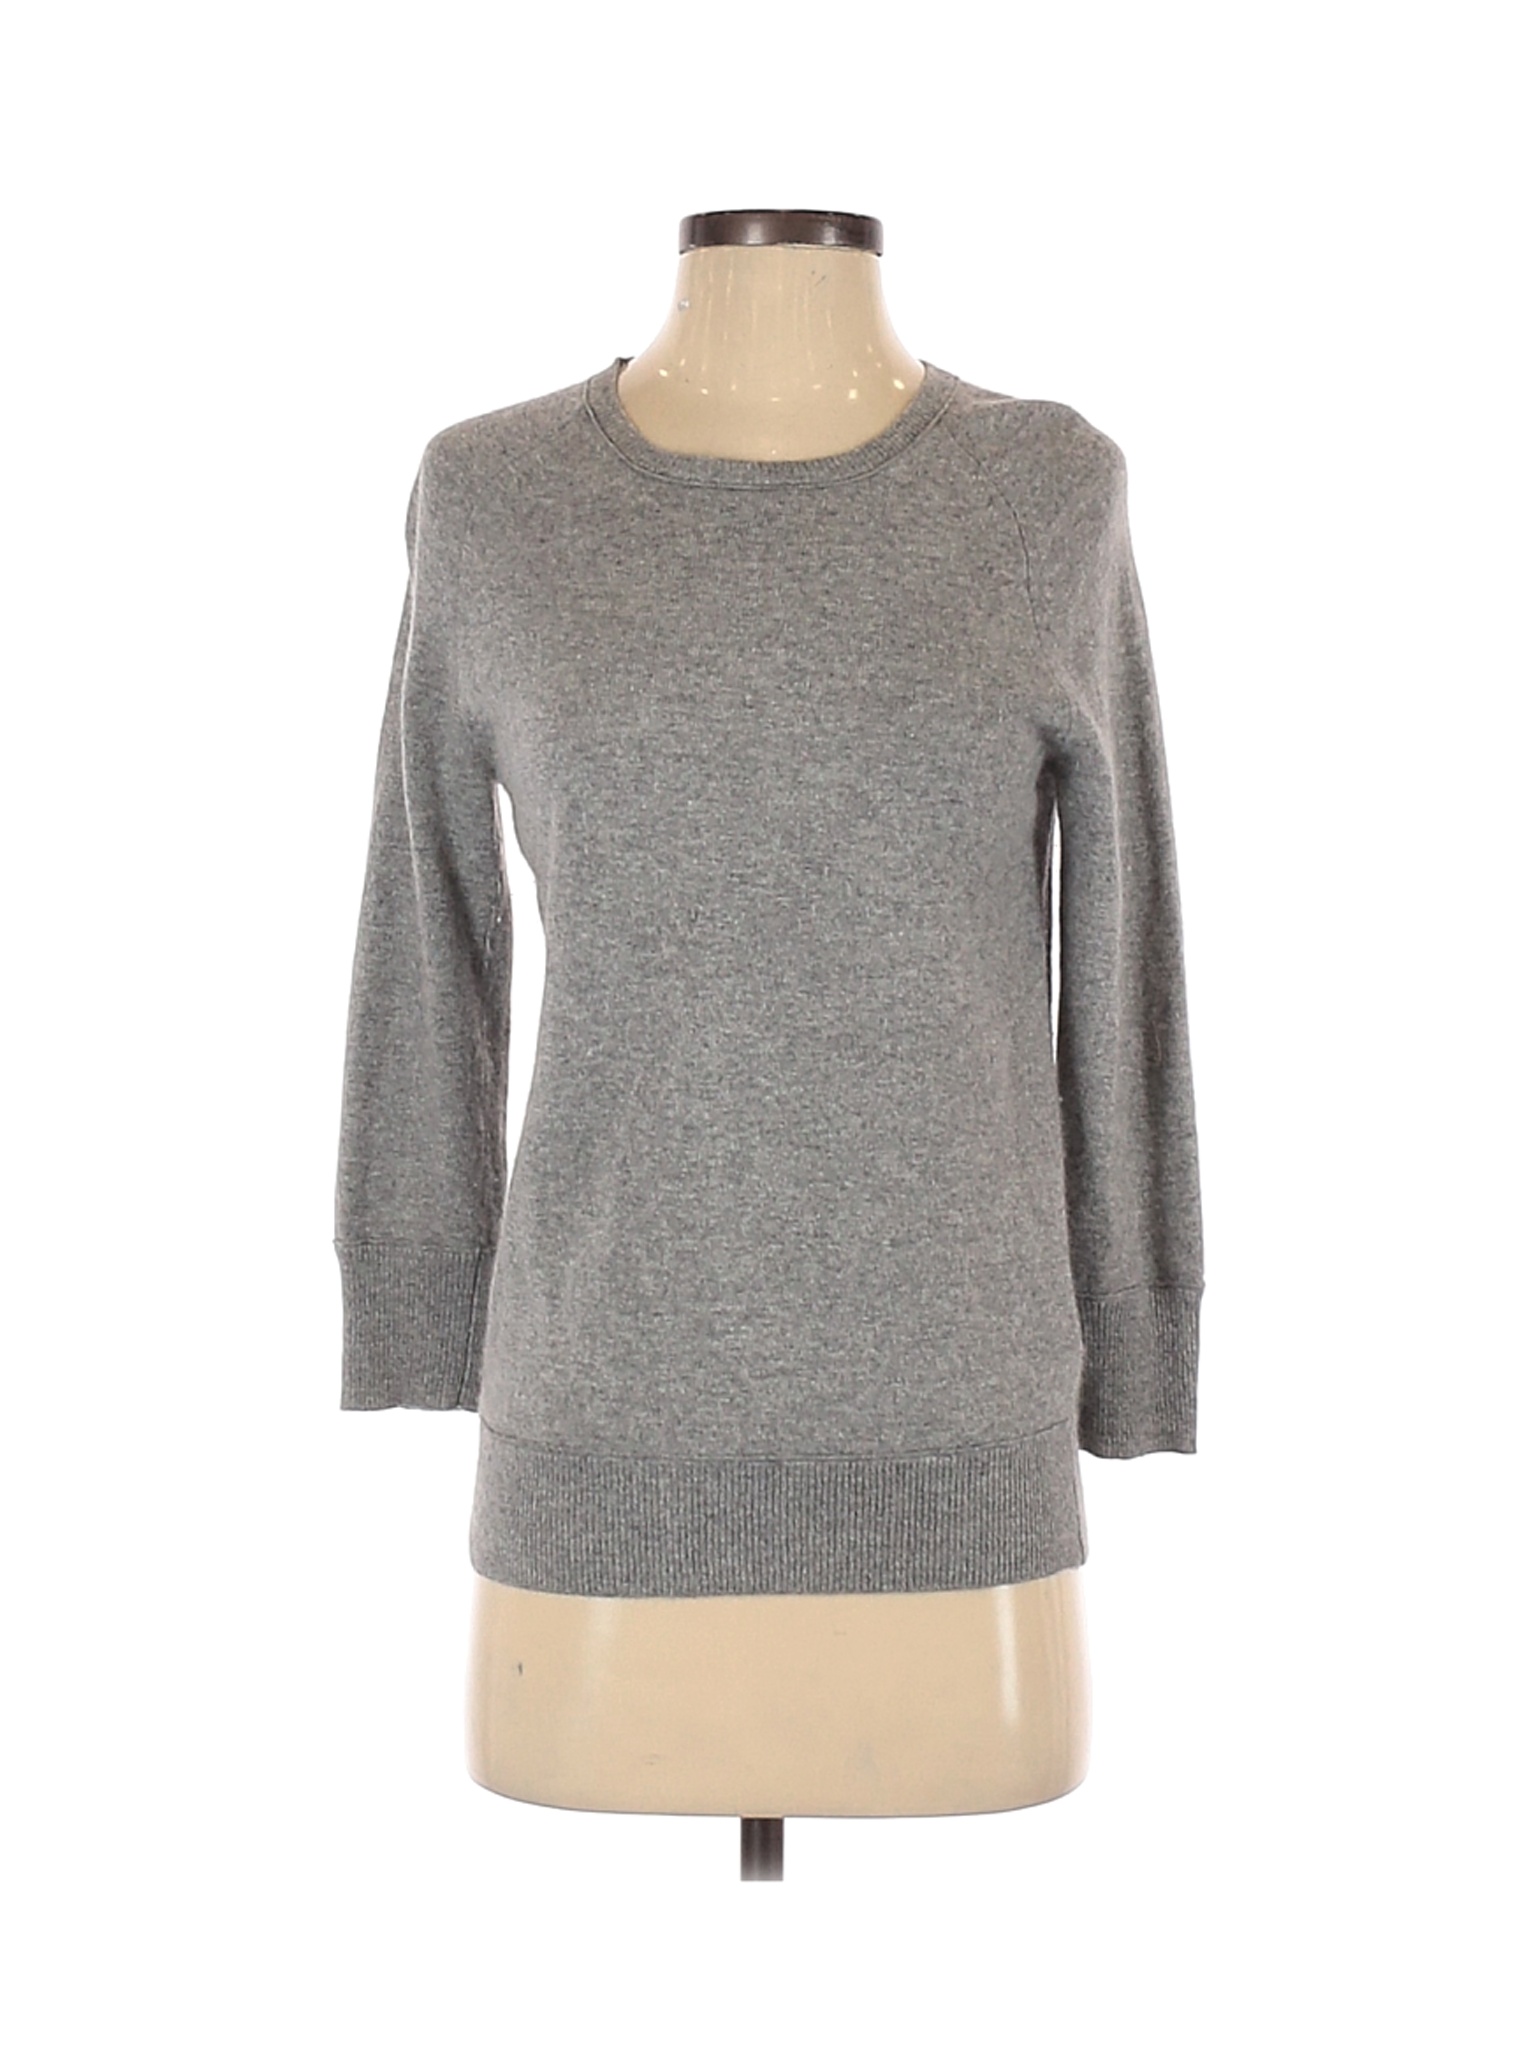 J.Crew Women Gray Pullover Sweater S | eBay